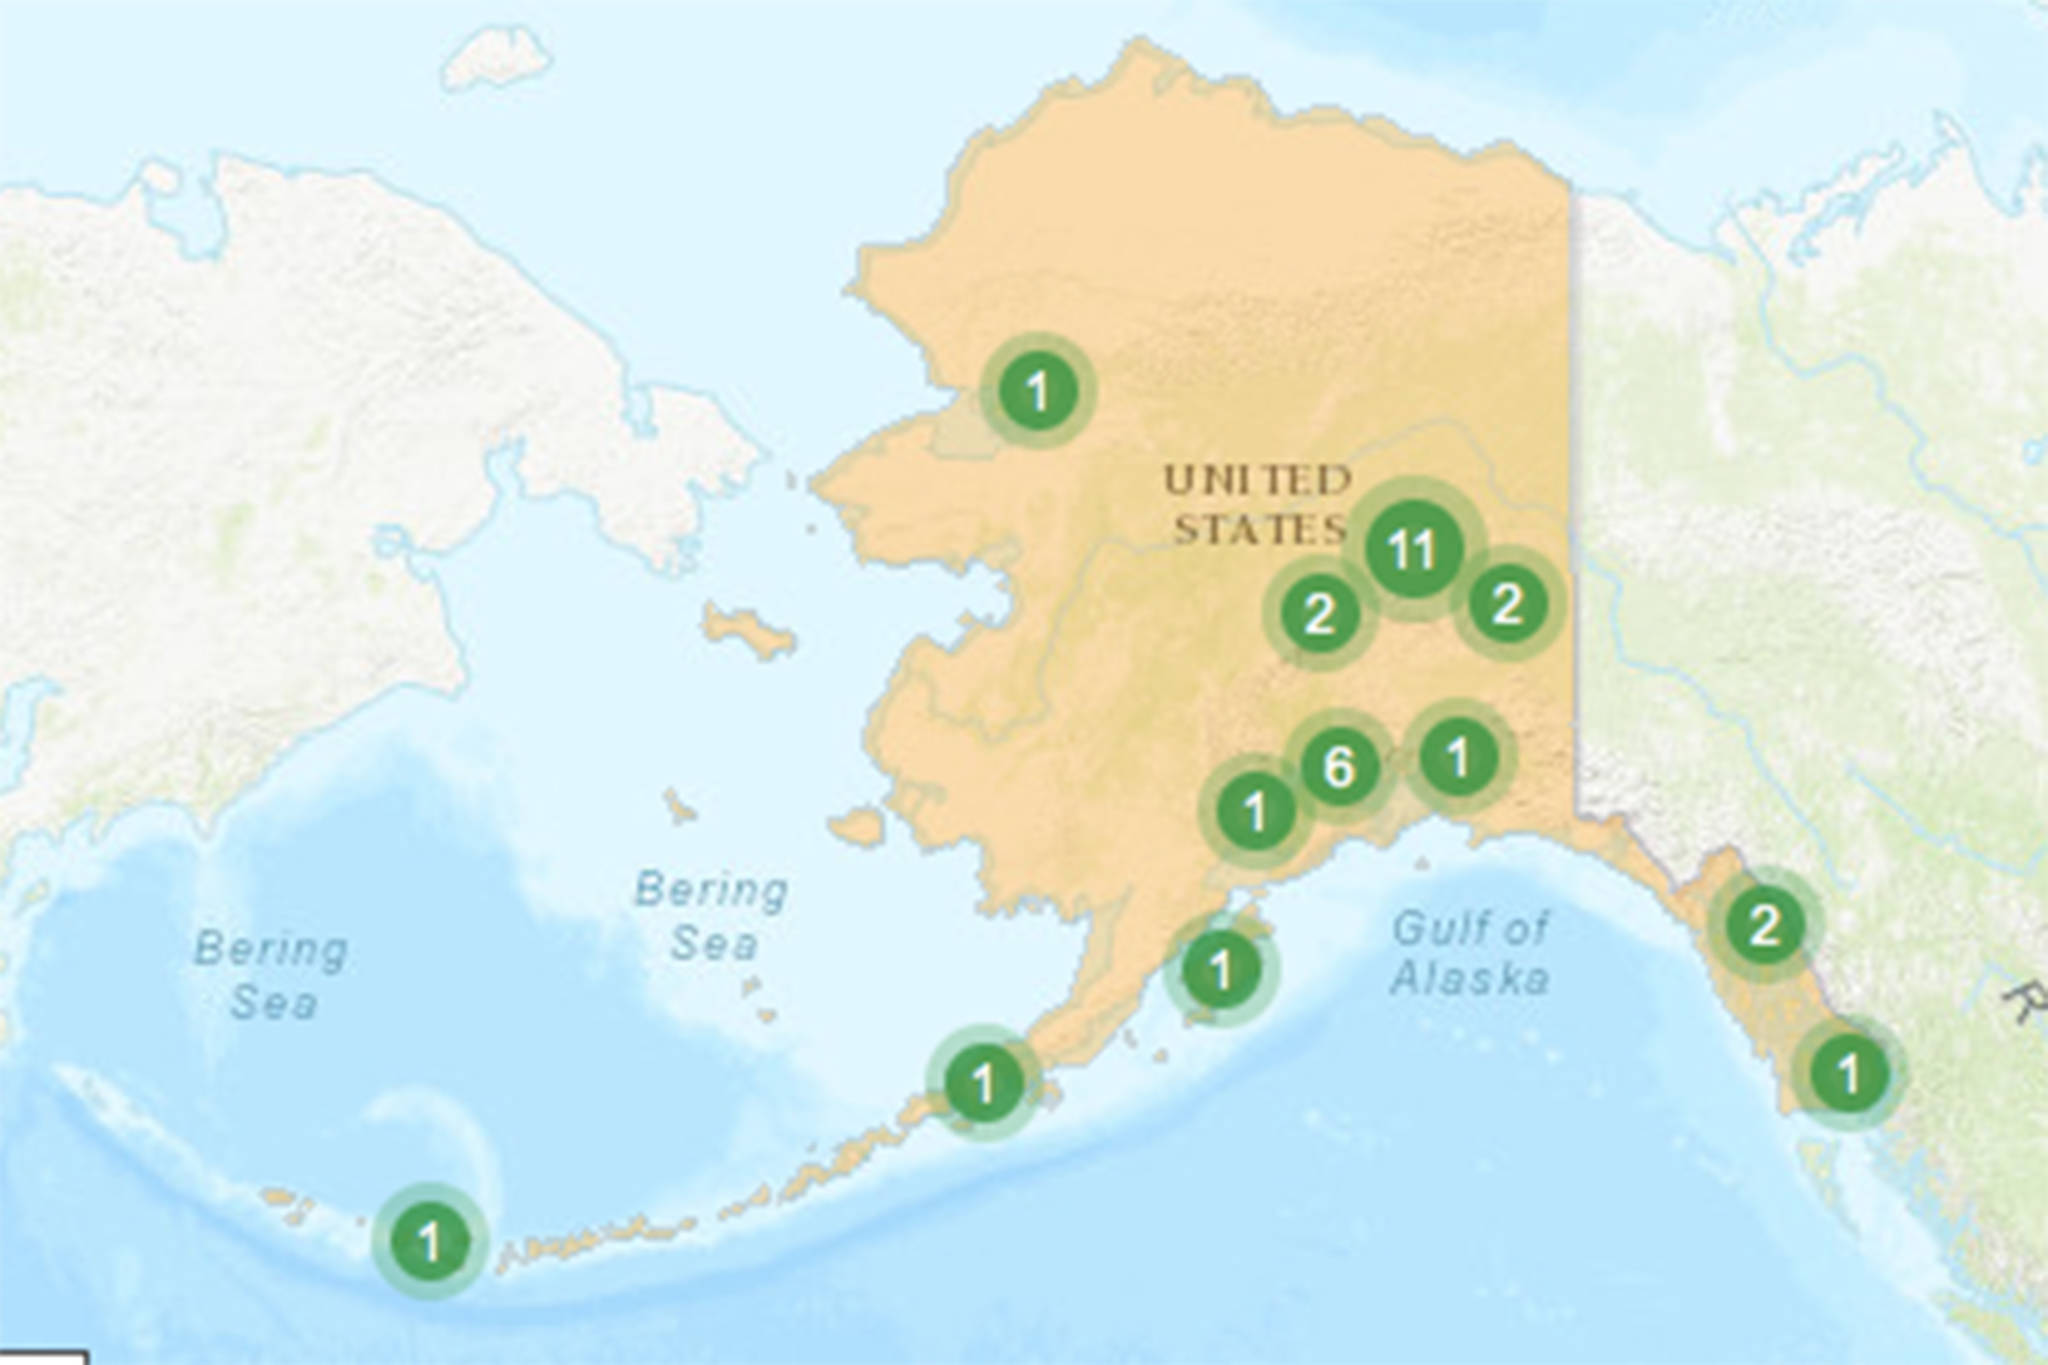 EPA: Alaska led nation in toxic chemical release